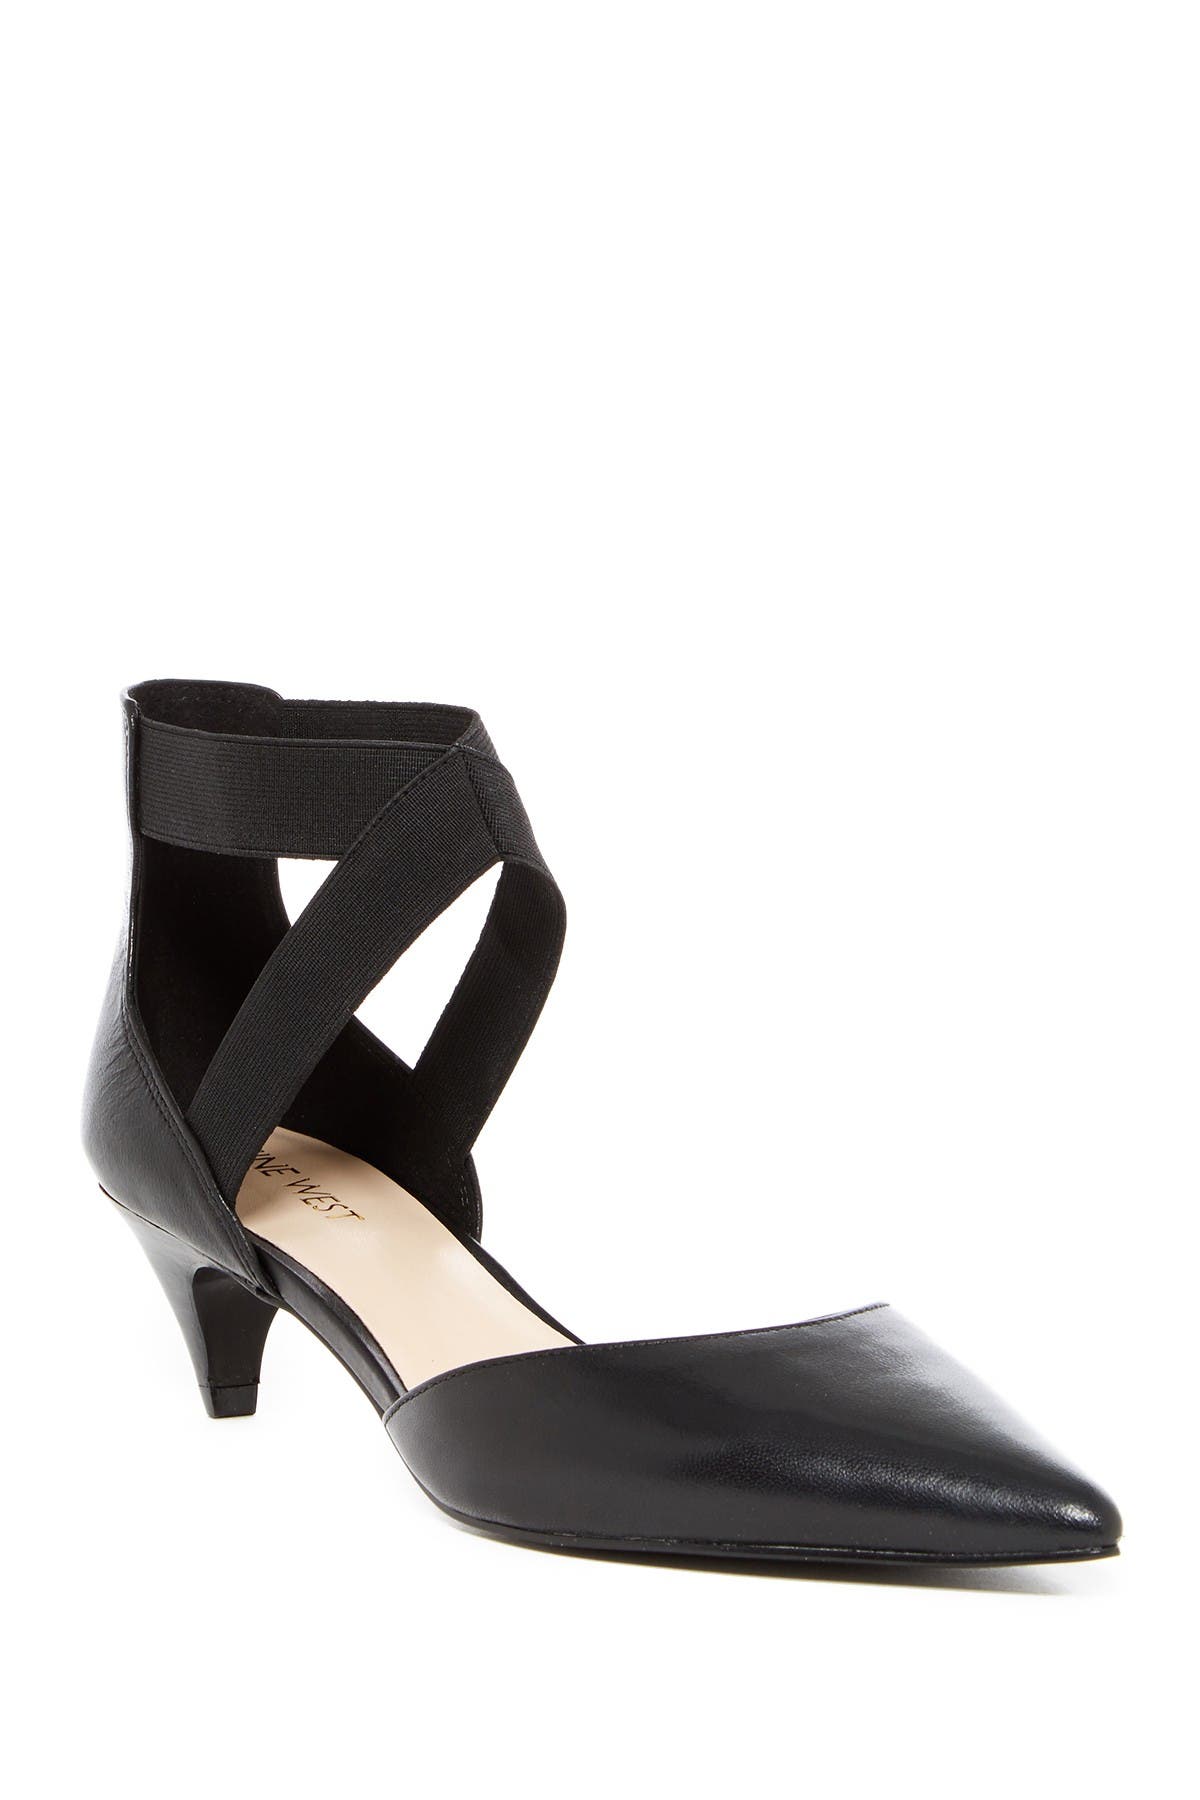 nine west black kitten heels